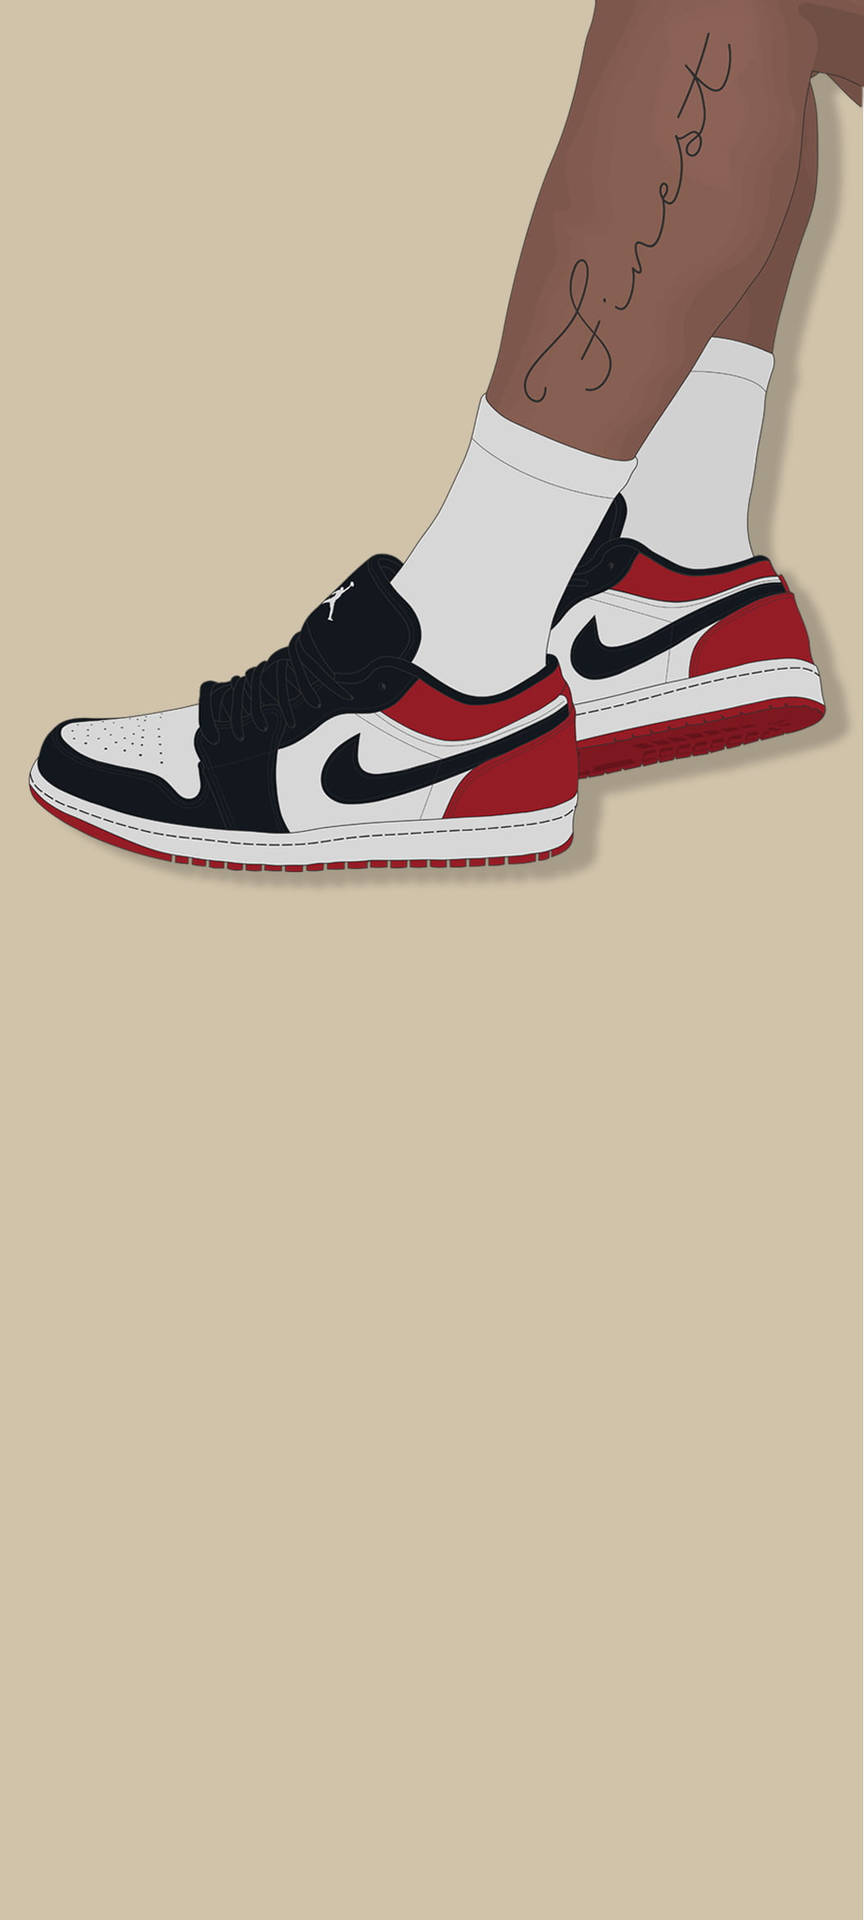 Cool Depiction Of Nike Jordan 1